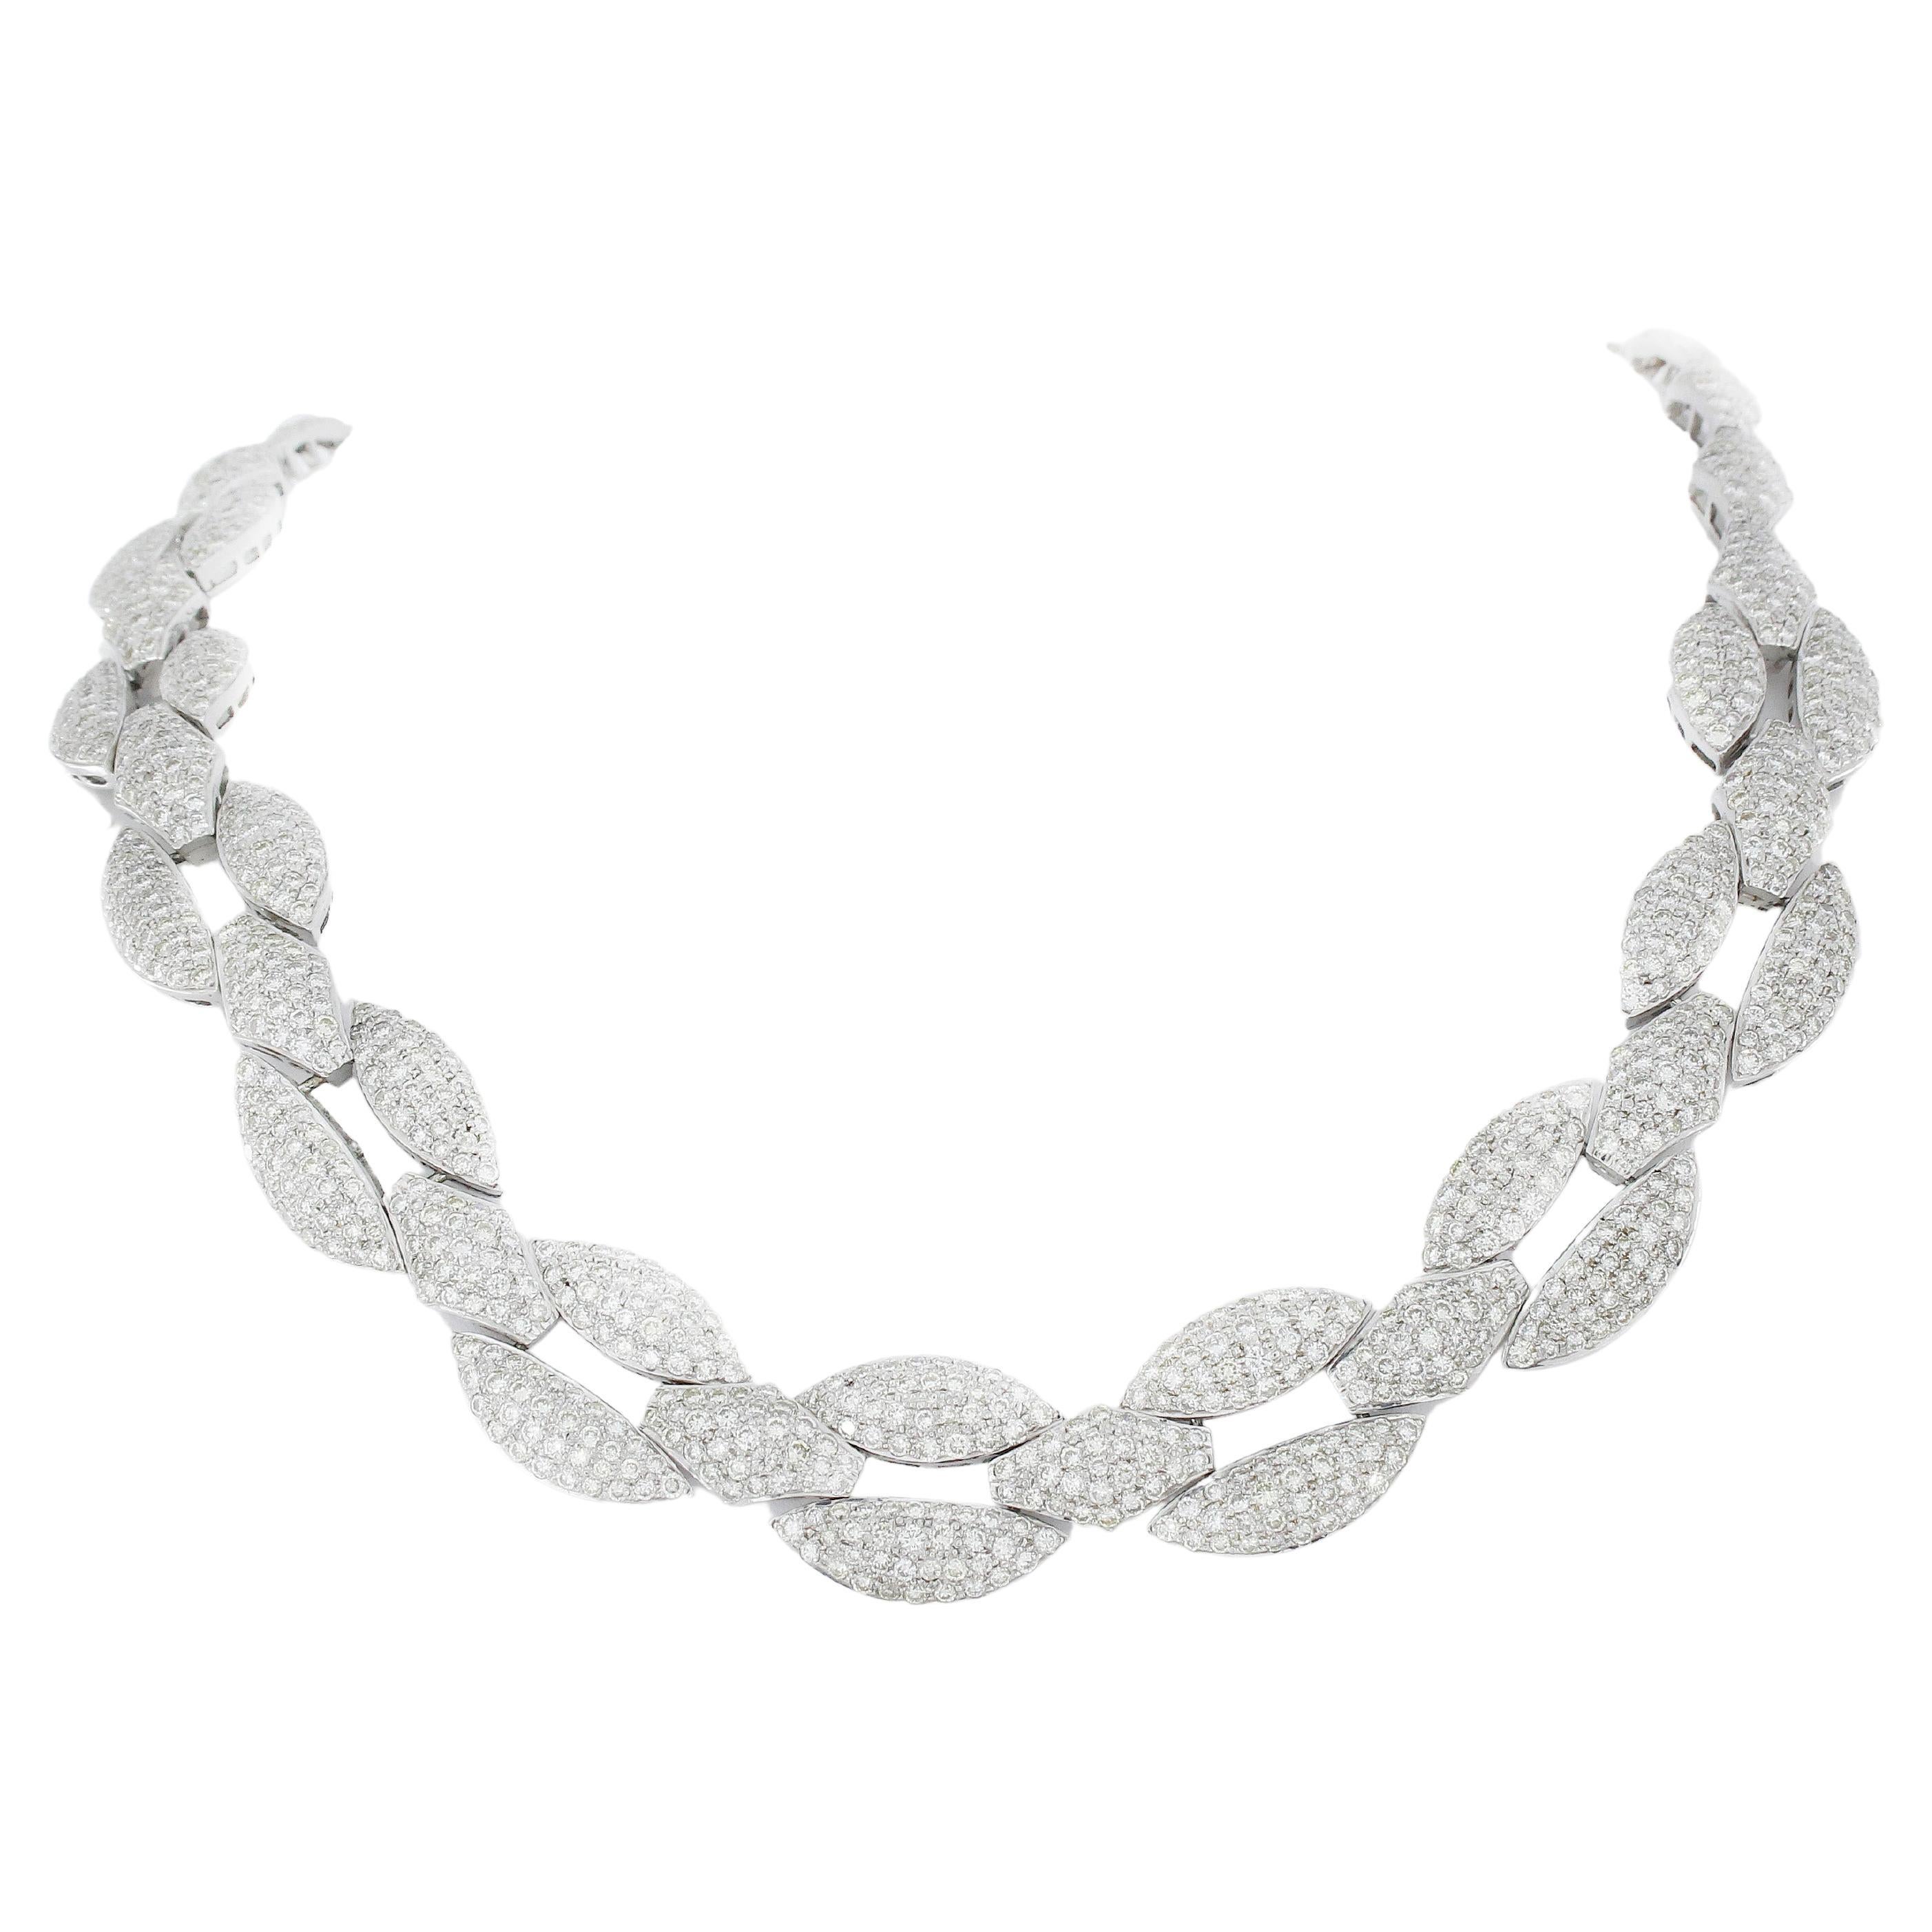 34.6 ct. Diamond Bracelet & Necklace White Gold Jewelry Set For Sale